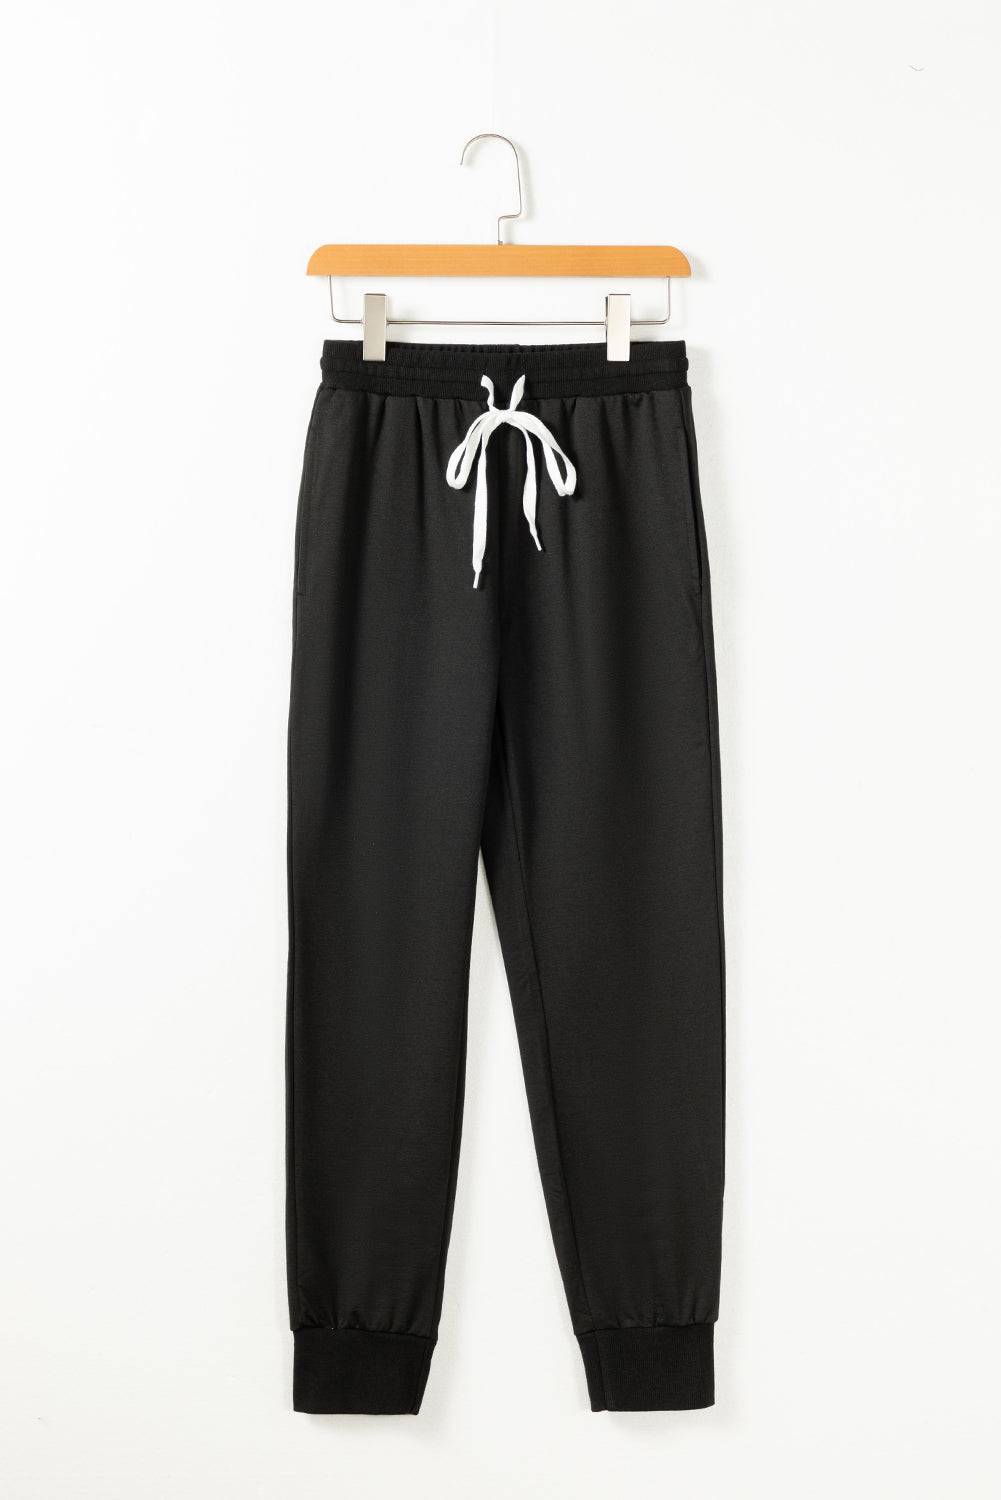 a black sweat pants hanging on a hanger